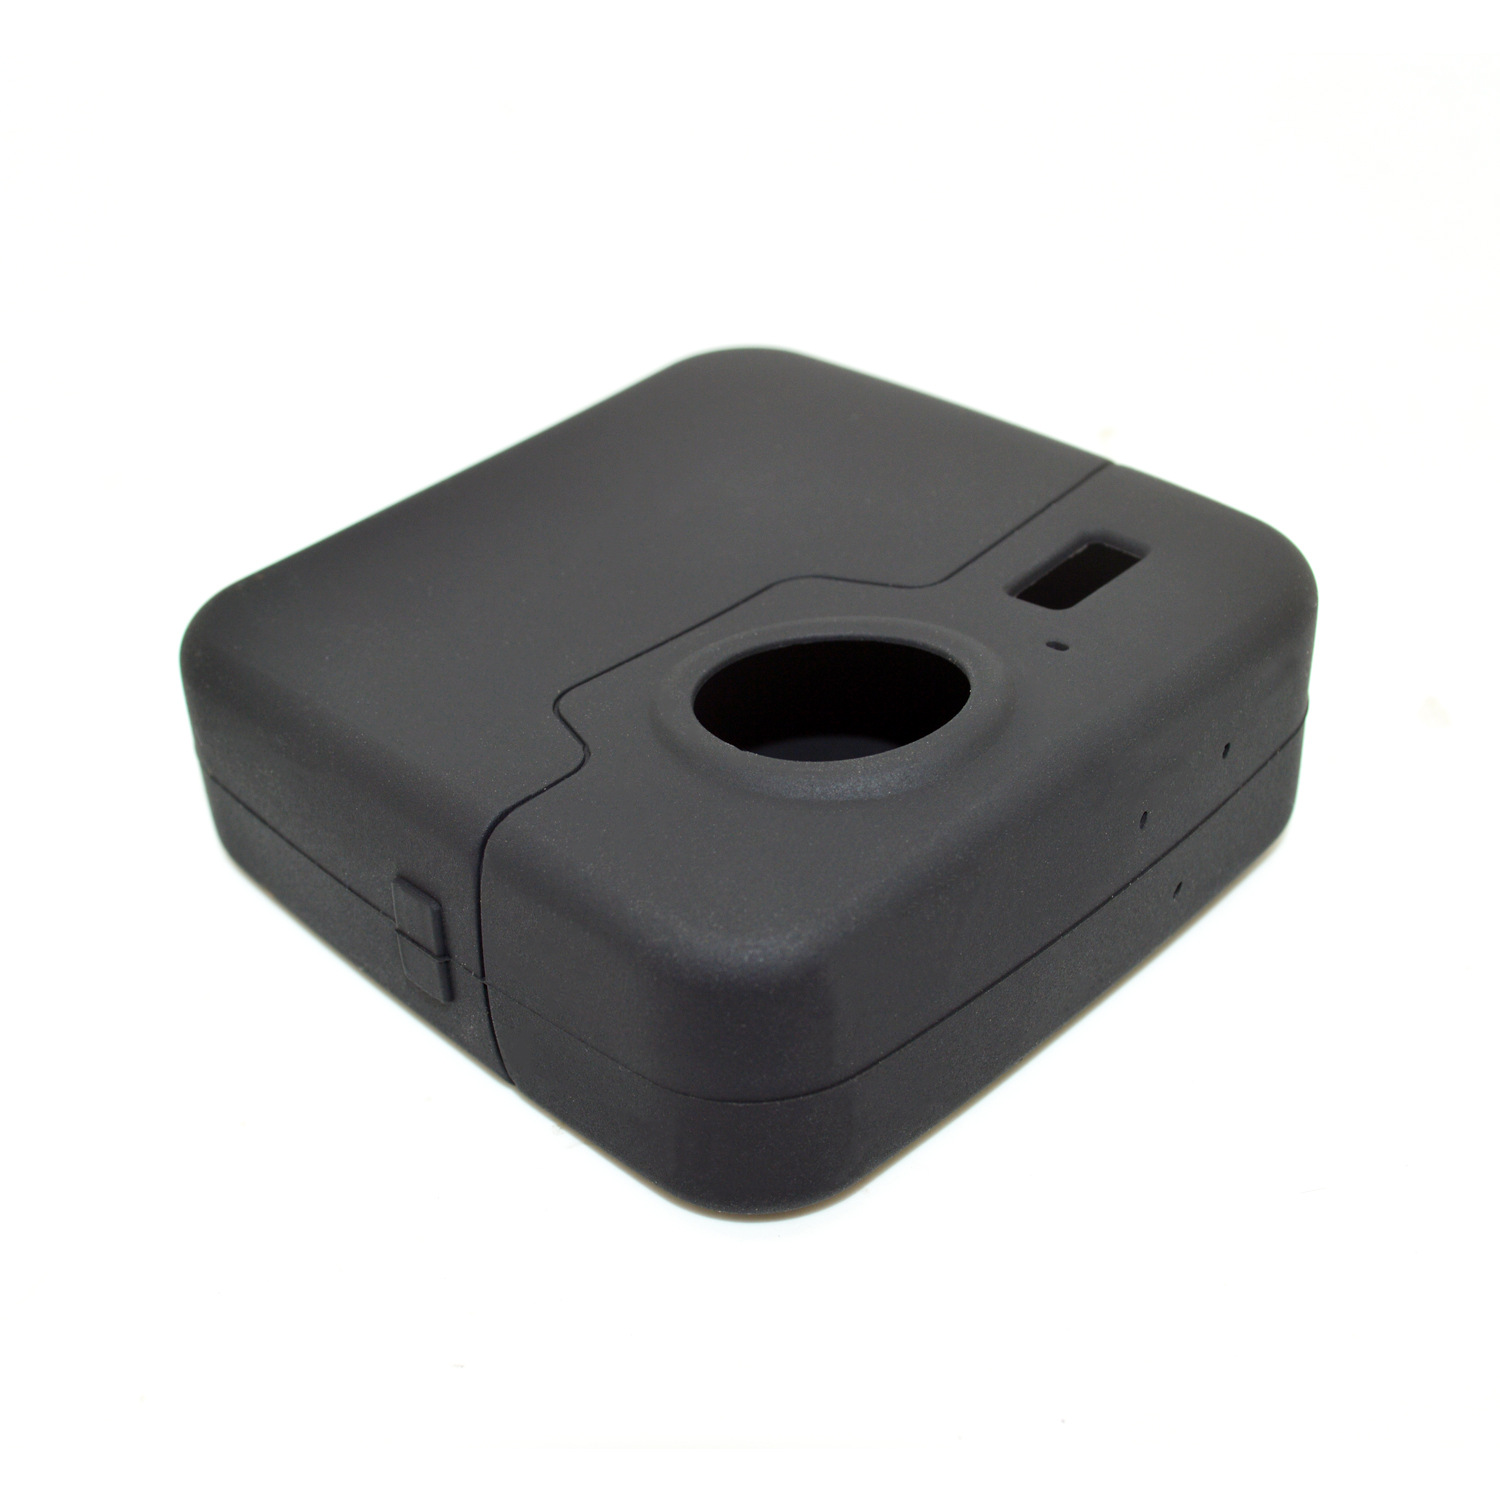 Silicone-Protective-Case-Skin-Cover-Camera-Accessories-for-GoPro-Fusion-360-Camera-8-Colors-1238129-1